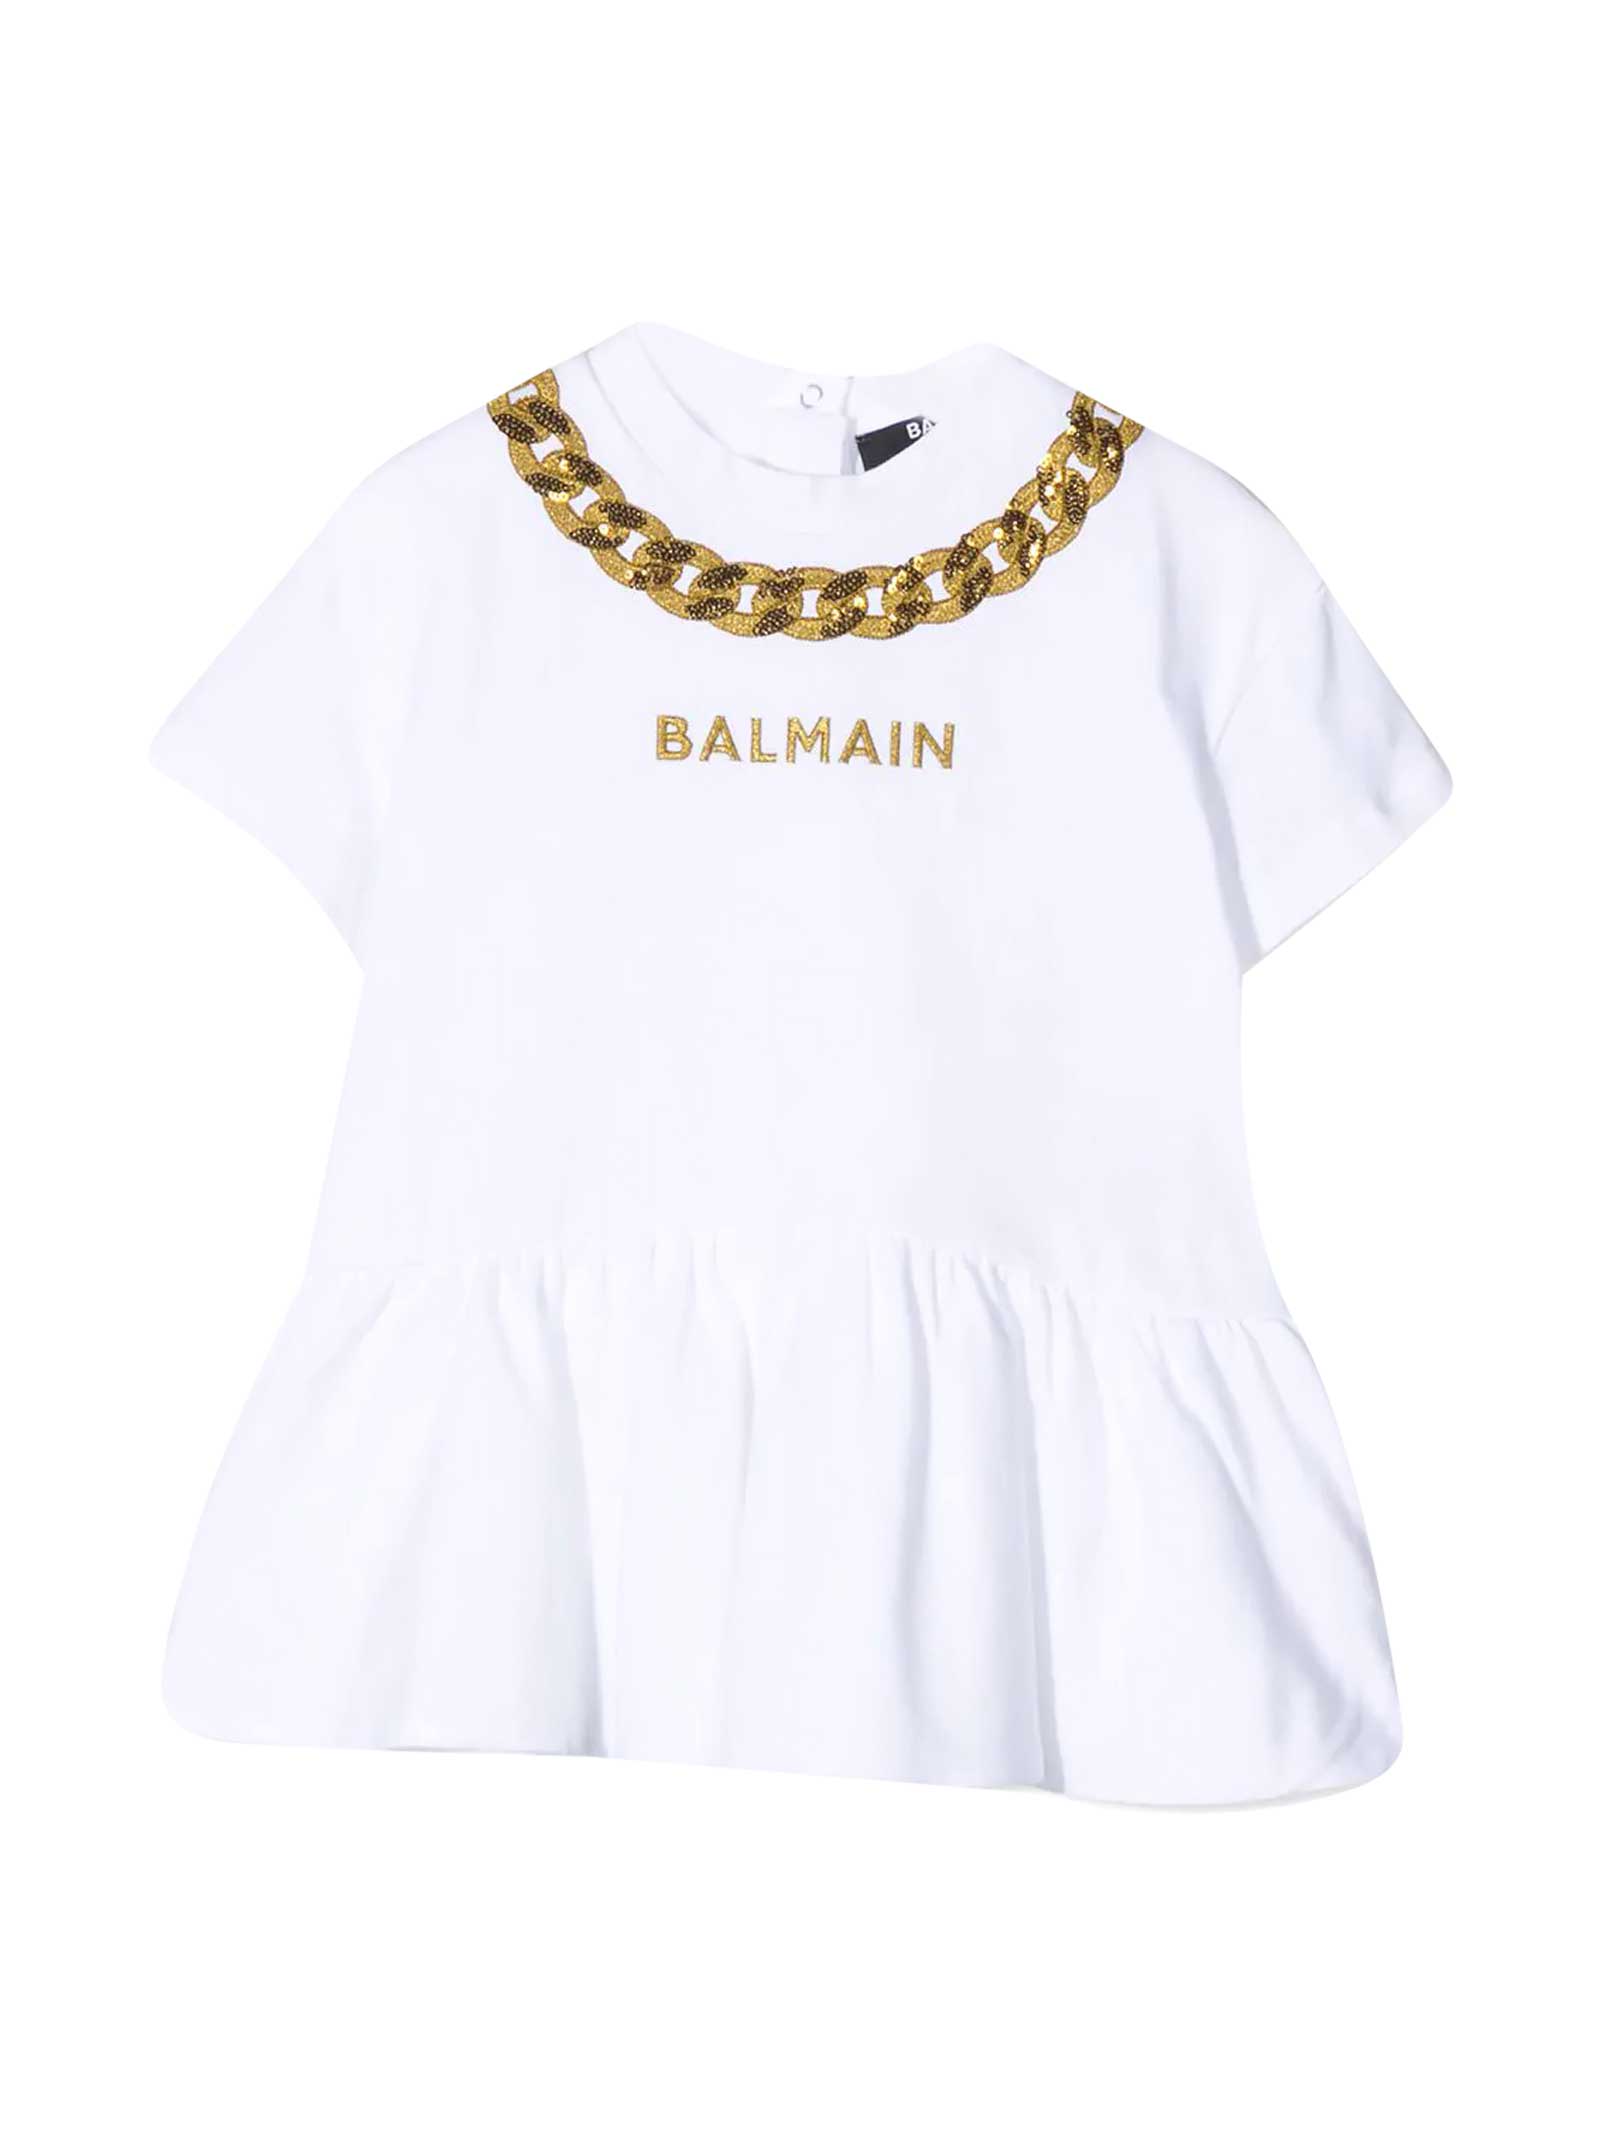 Balmain White T-shirt Dress